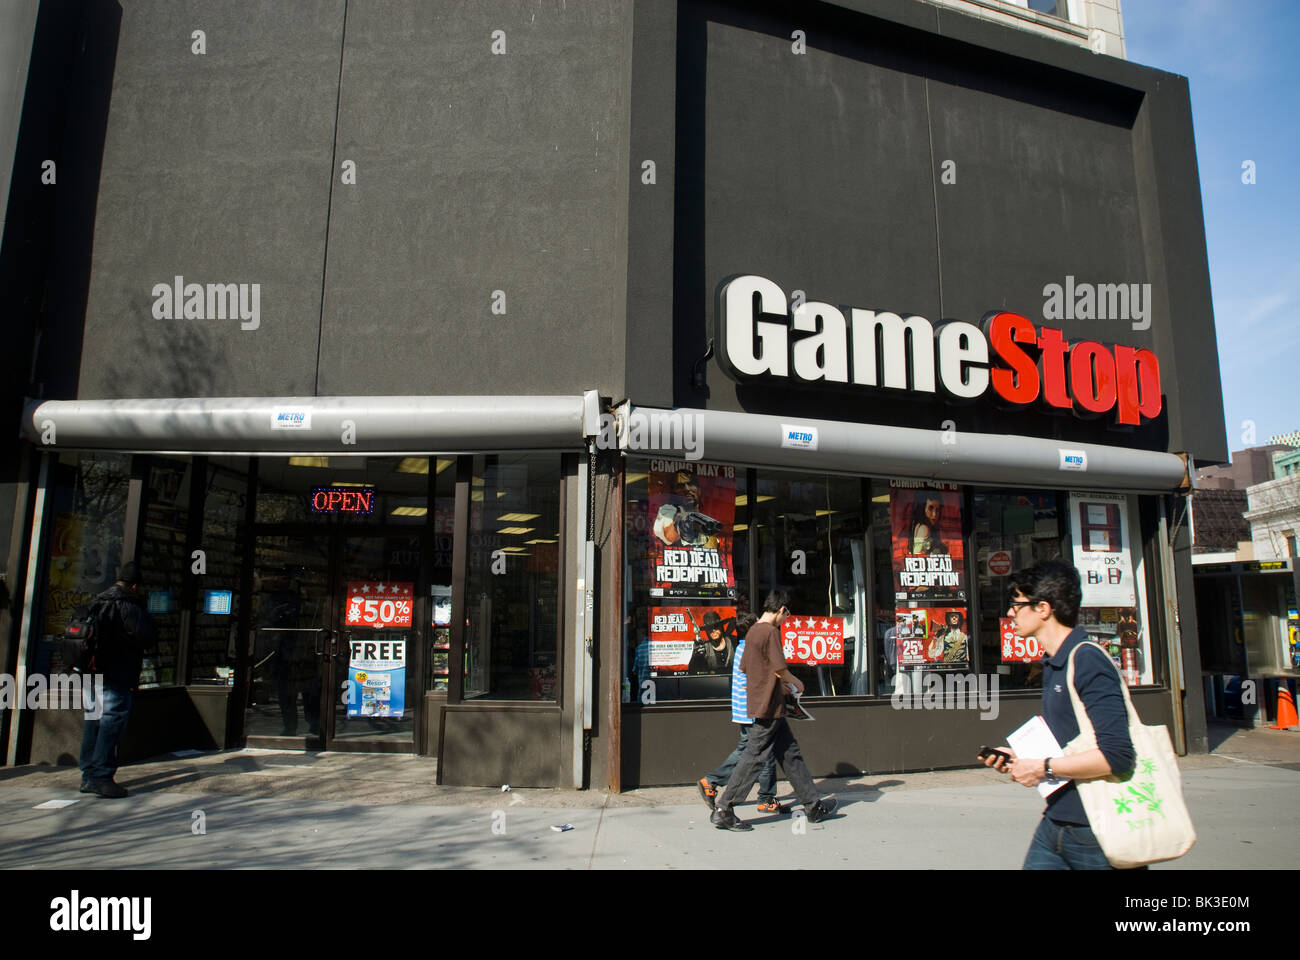 video game store brooklyn